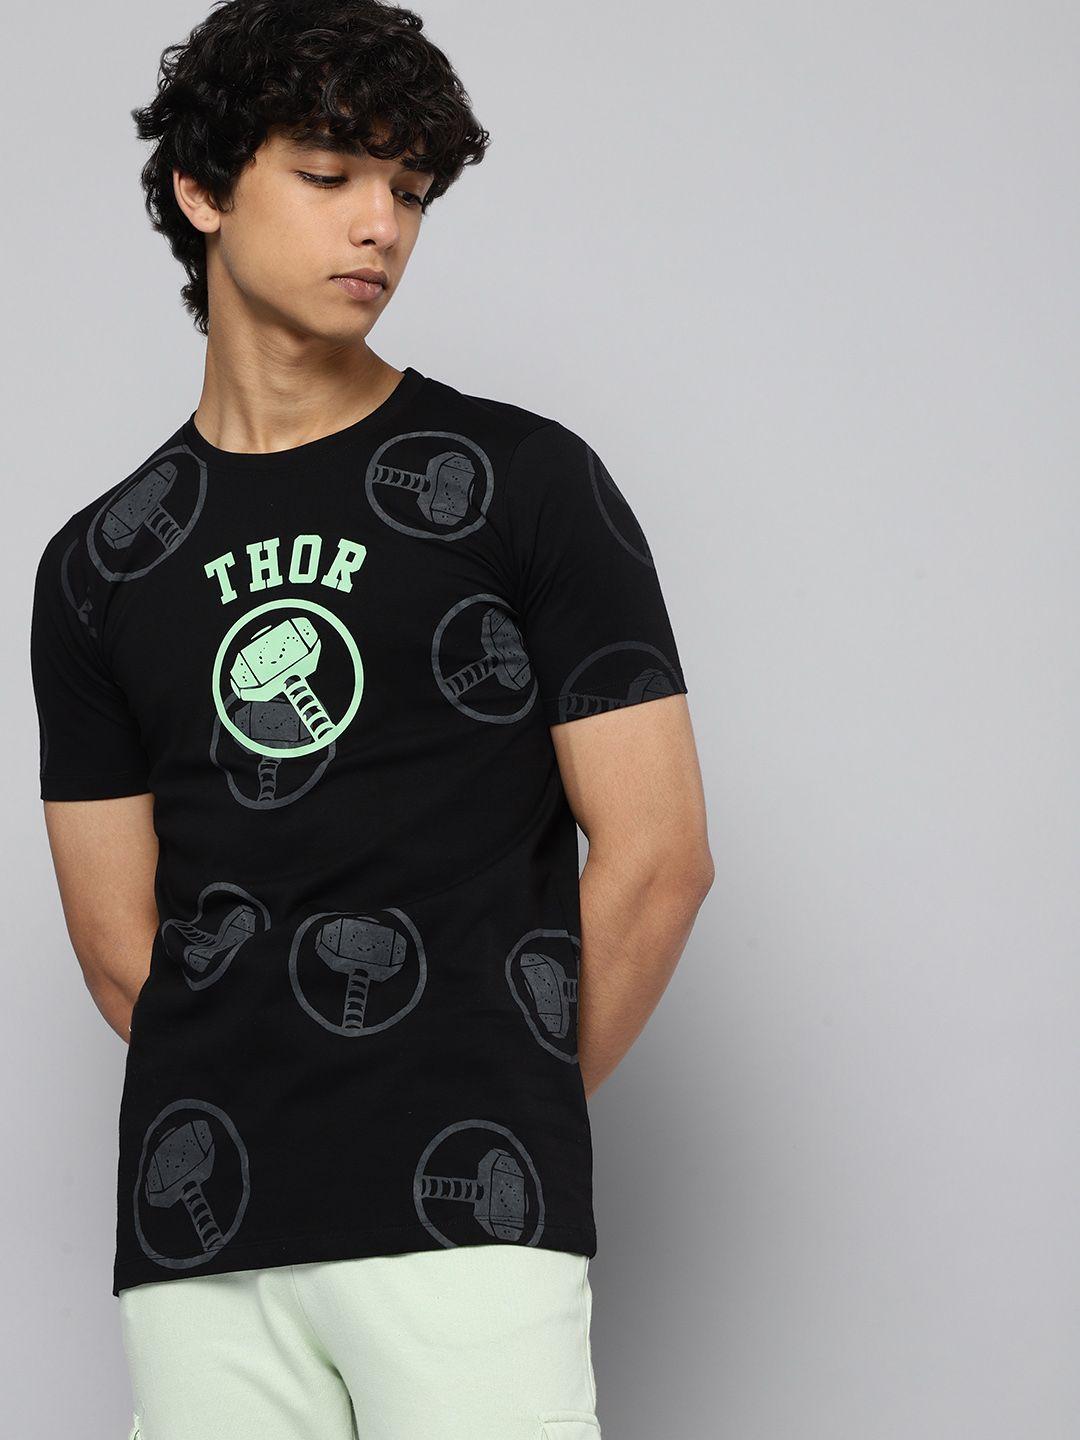 kook n keech marvel teens boys black printed pure cotton t-shirt